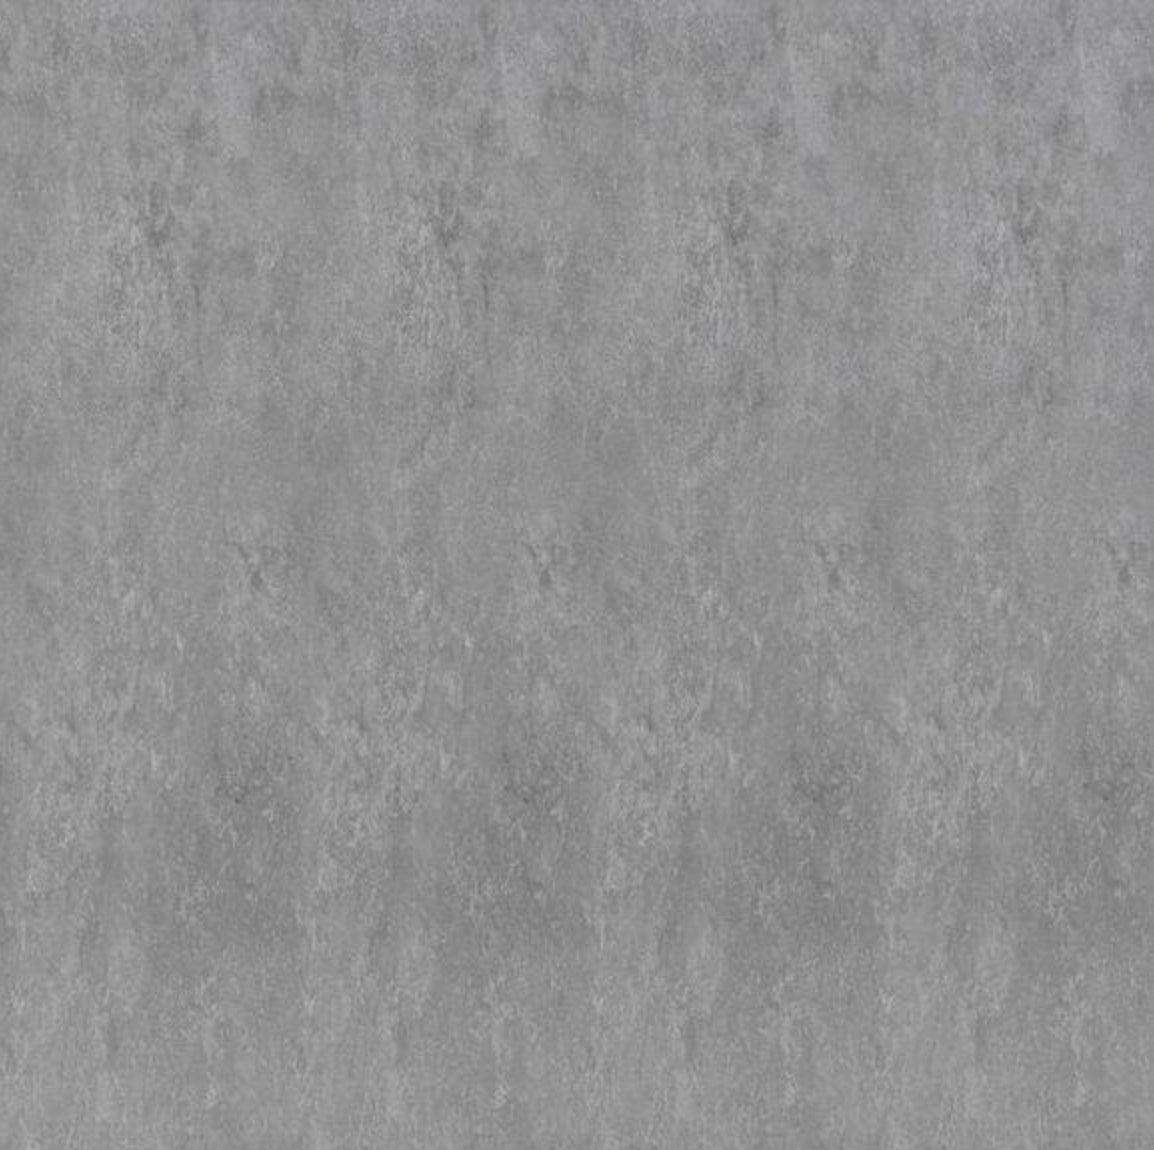 SplashPanel PVC Wall Panel - Grey Concrete Matt